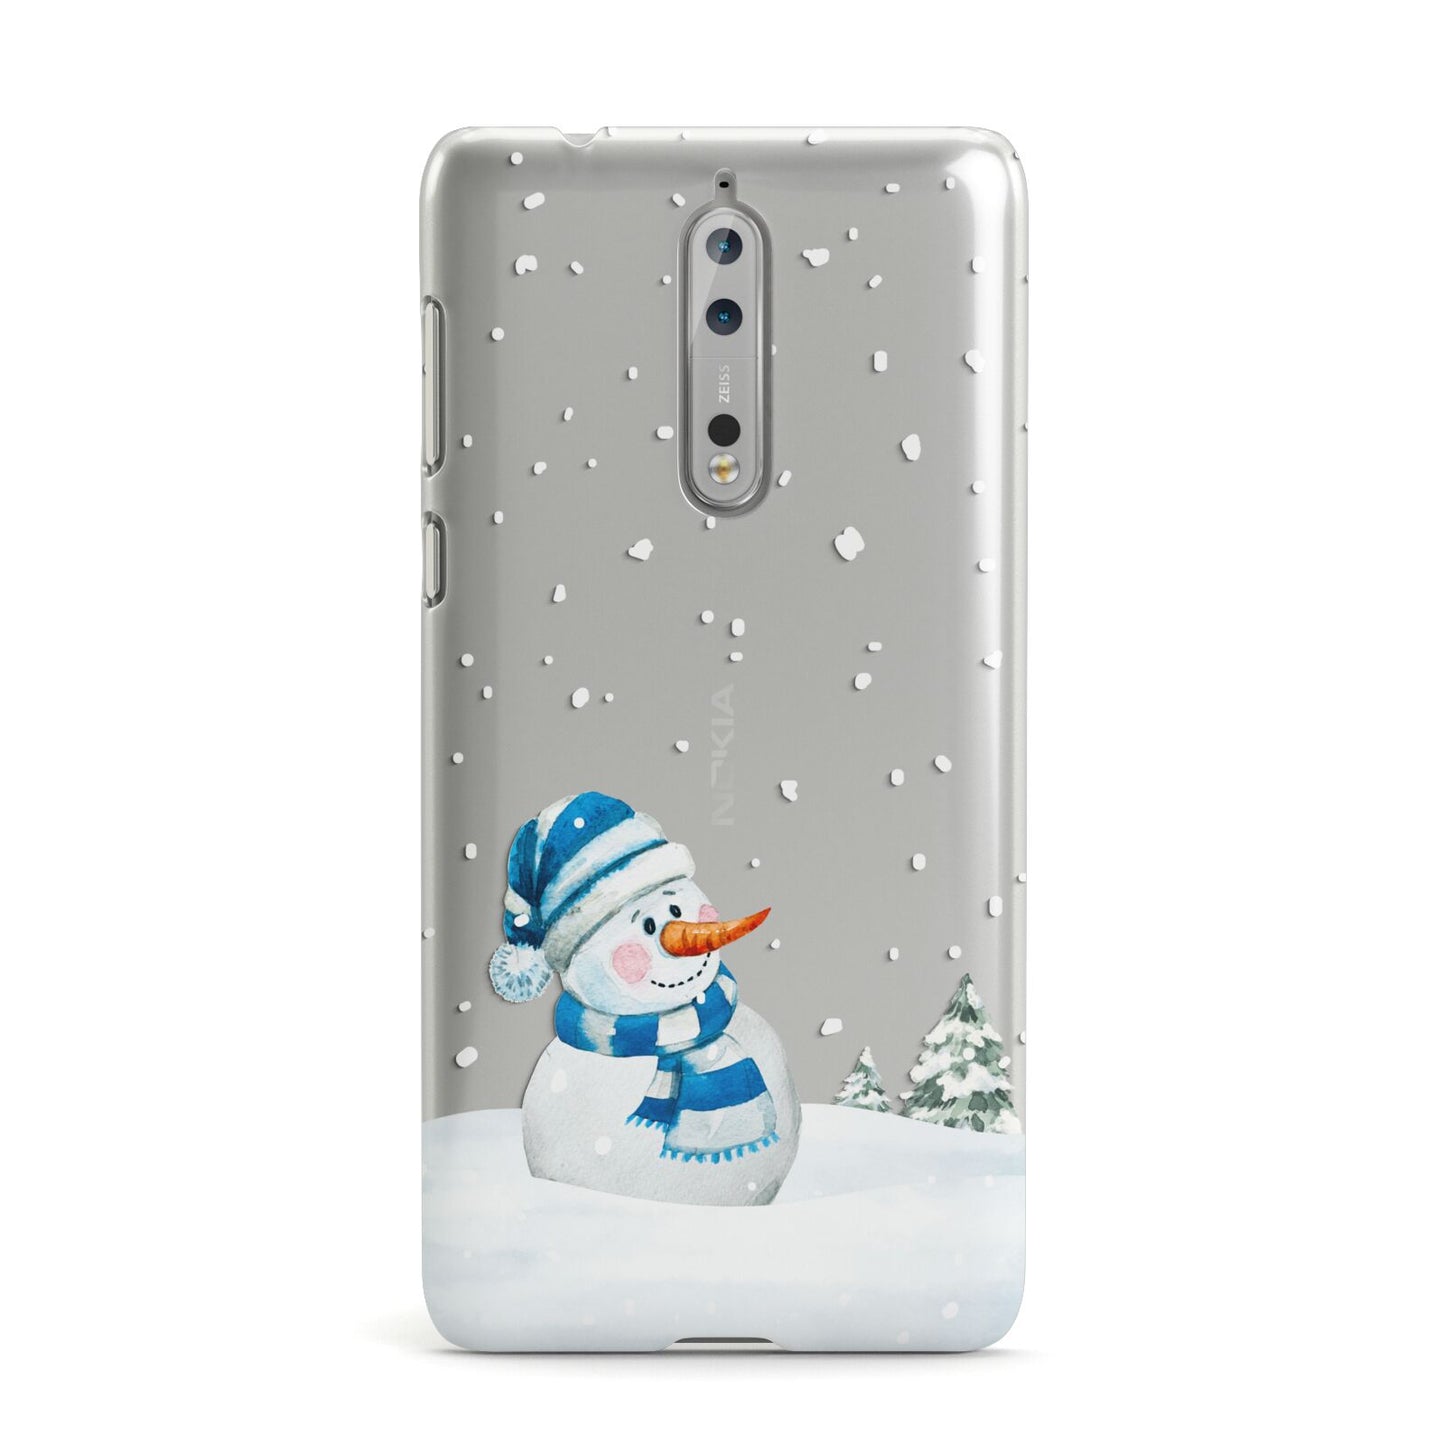 Snowman Nokia Case